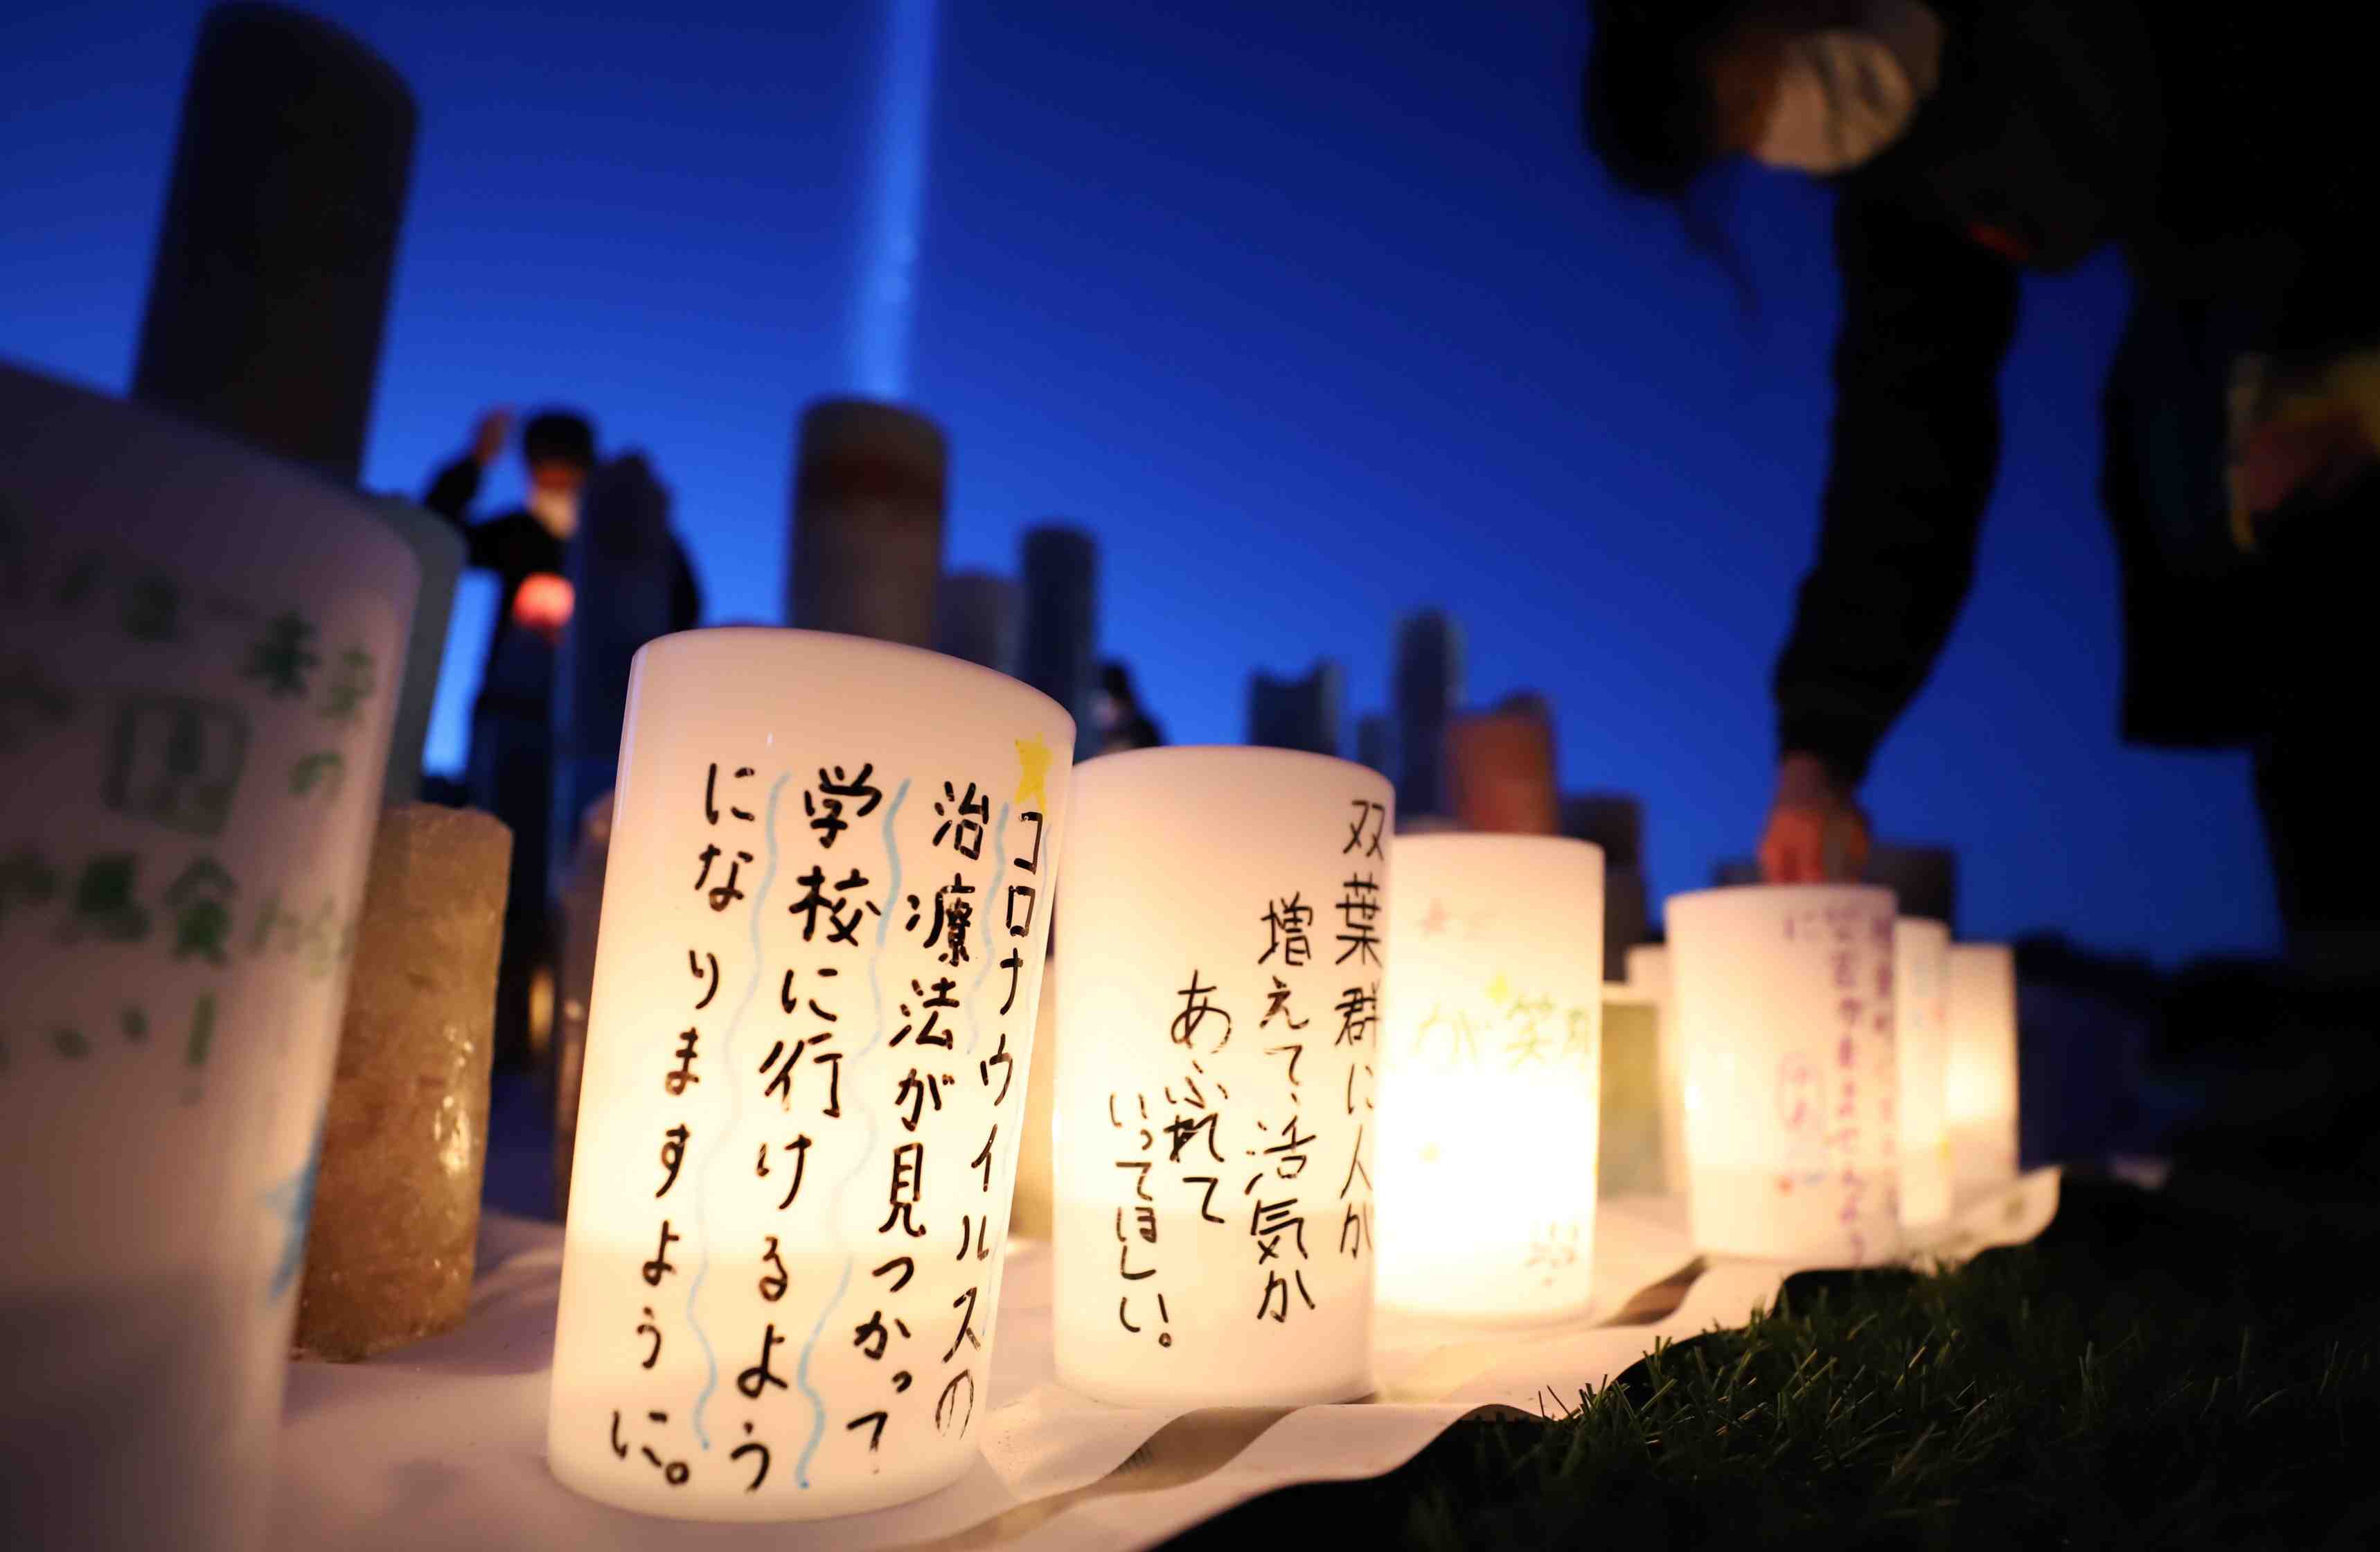 Japan 3.11 Anniversary The Great Tohoku Earthquake 004